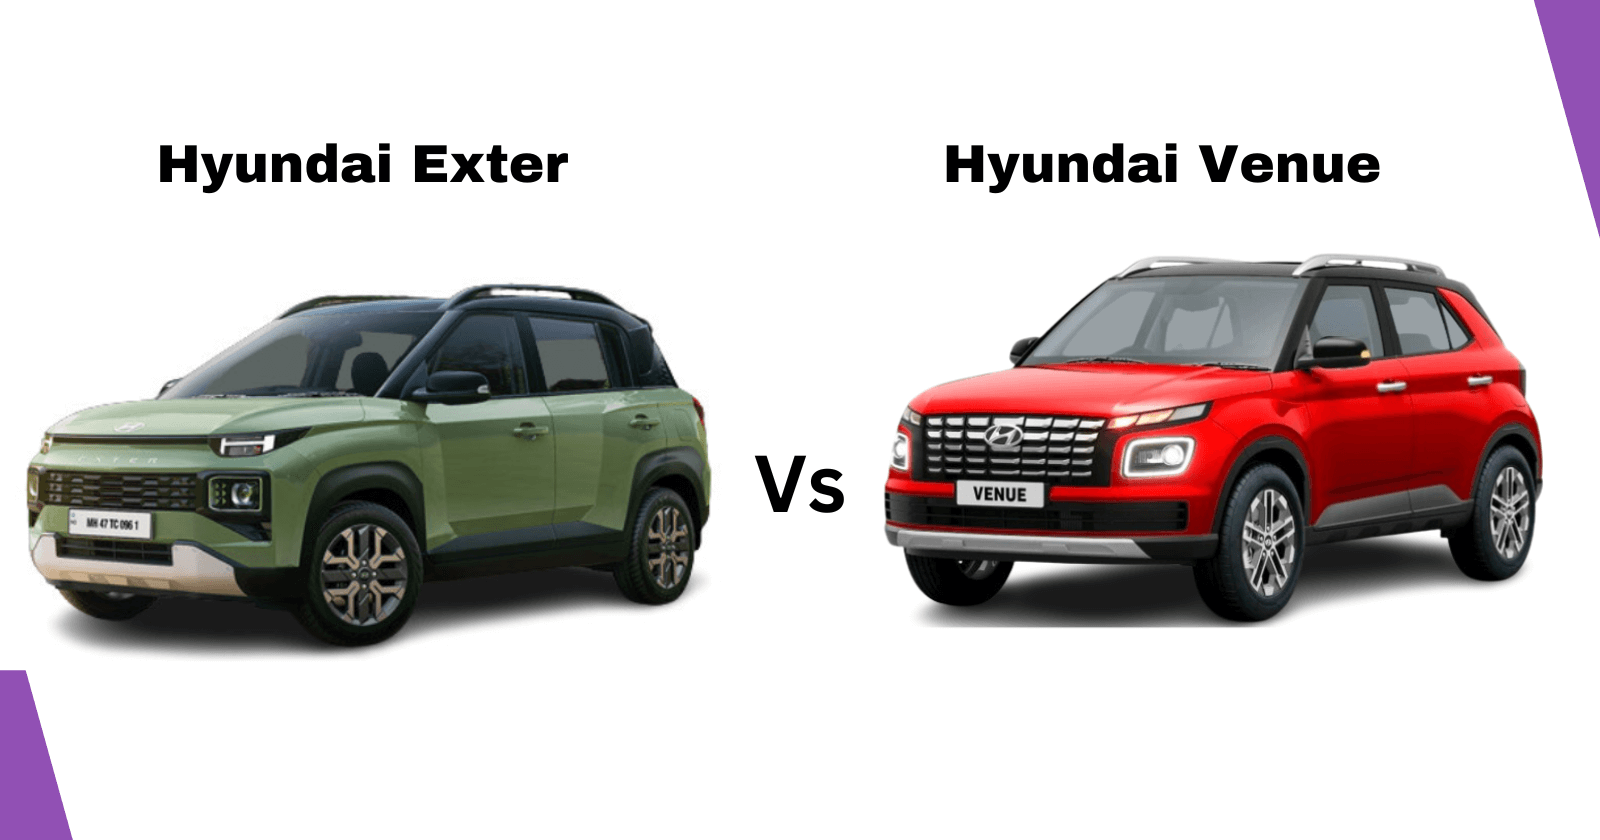 Hyundai Exter and Hyundai Venue 